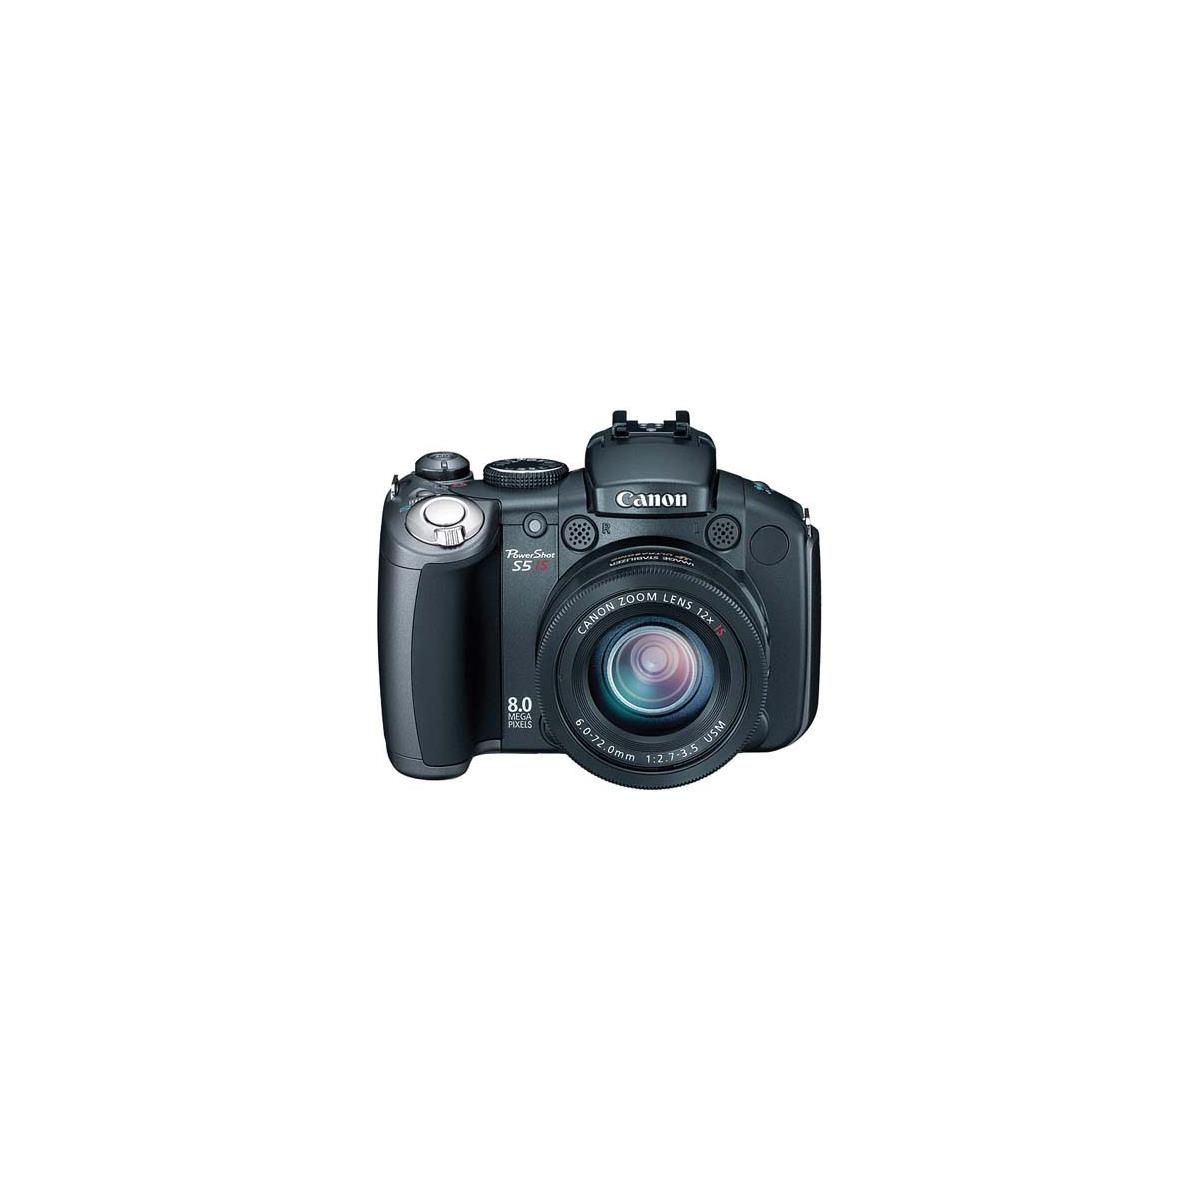 Canon PowerShot S5 IS Digital Camera, 8.0 Megapixel, 12x Optical Zoom, 4x Digital Zoom, 2.5" LCD Screen -  2077B001